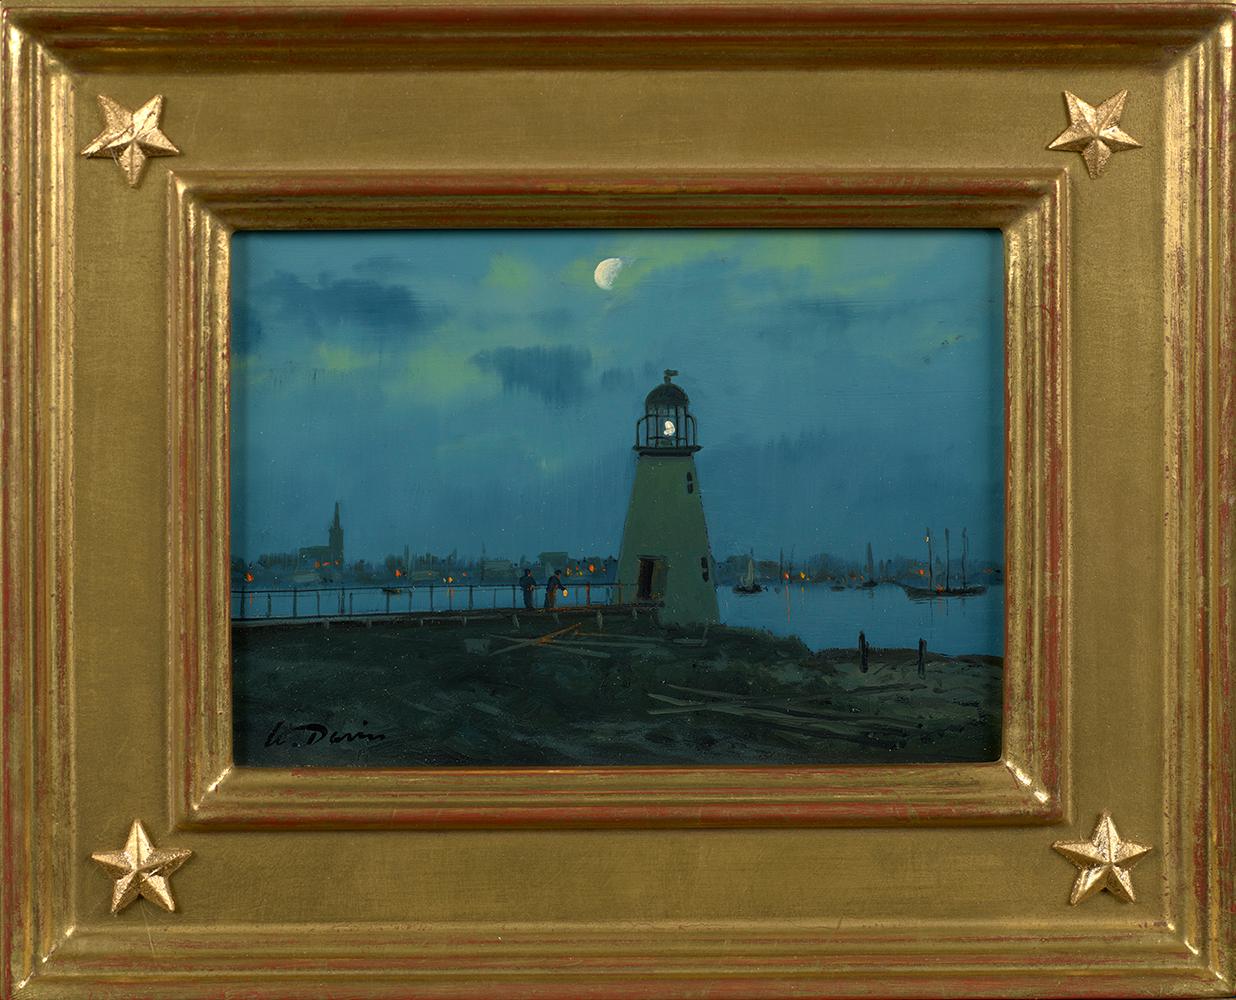 Palmer Island Light, New Bedford, MA. c. 1870, 2020 - Painting by William Davis, Jr.